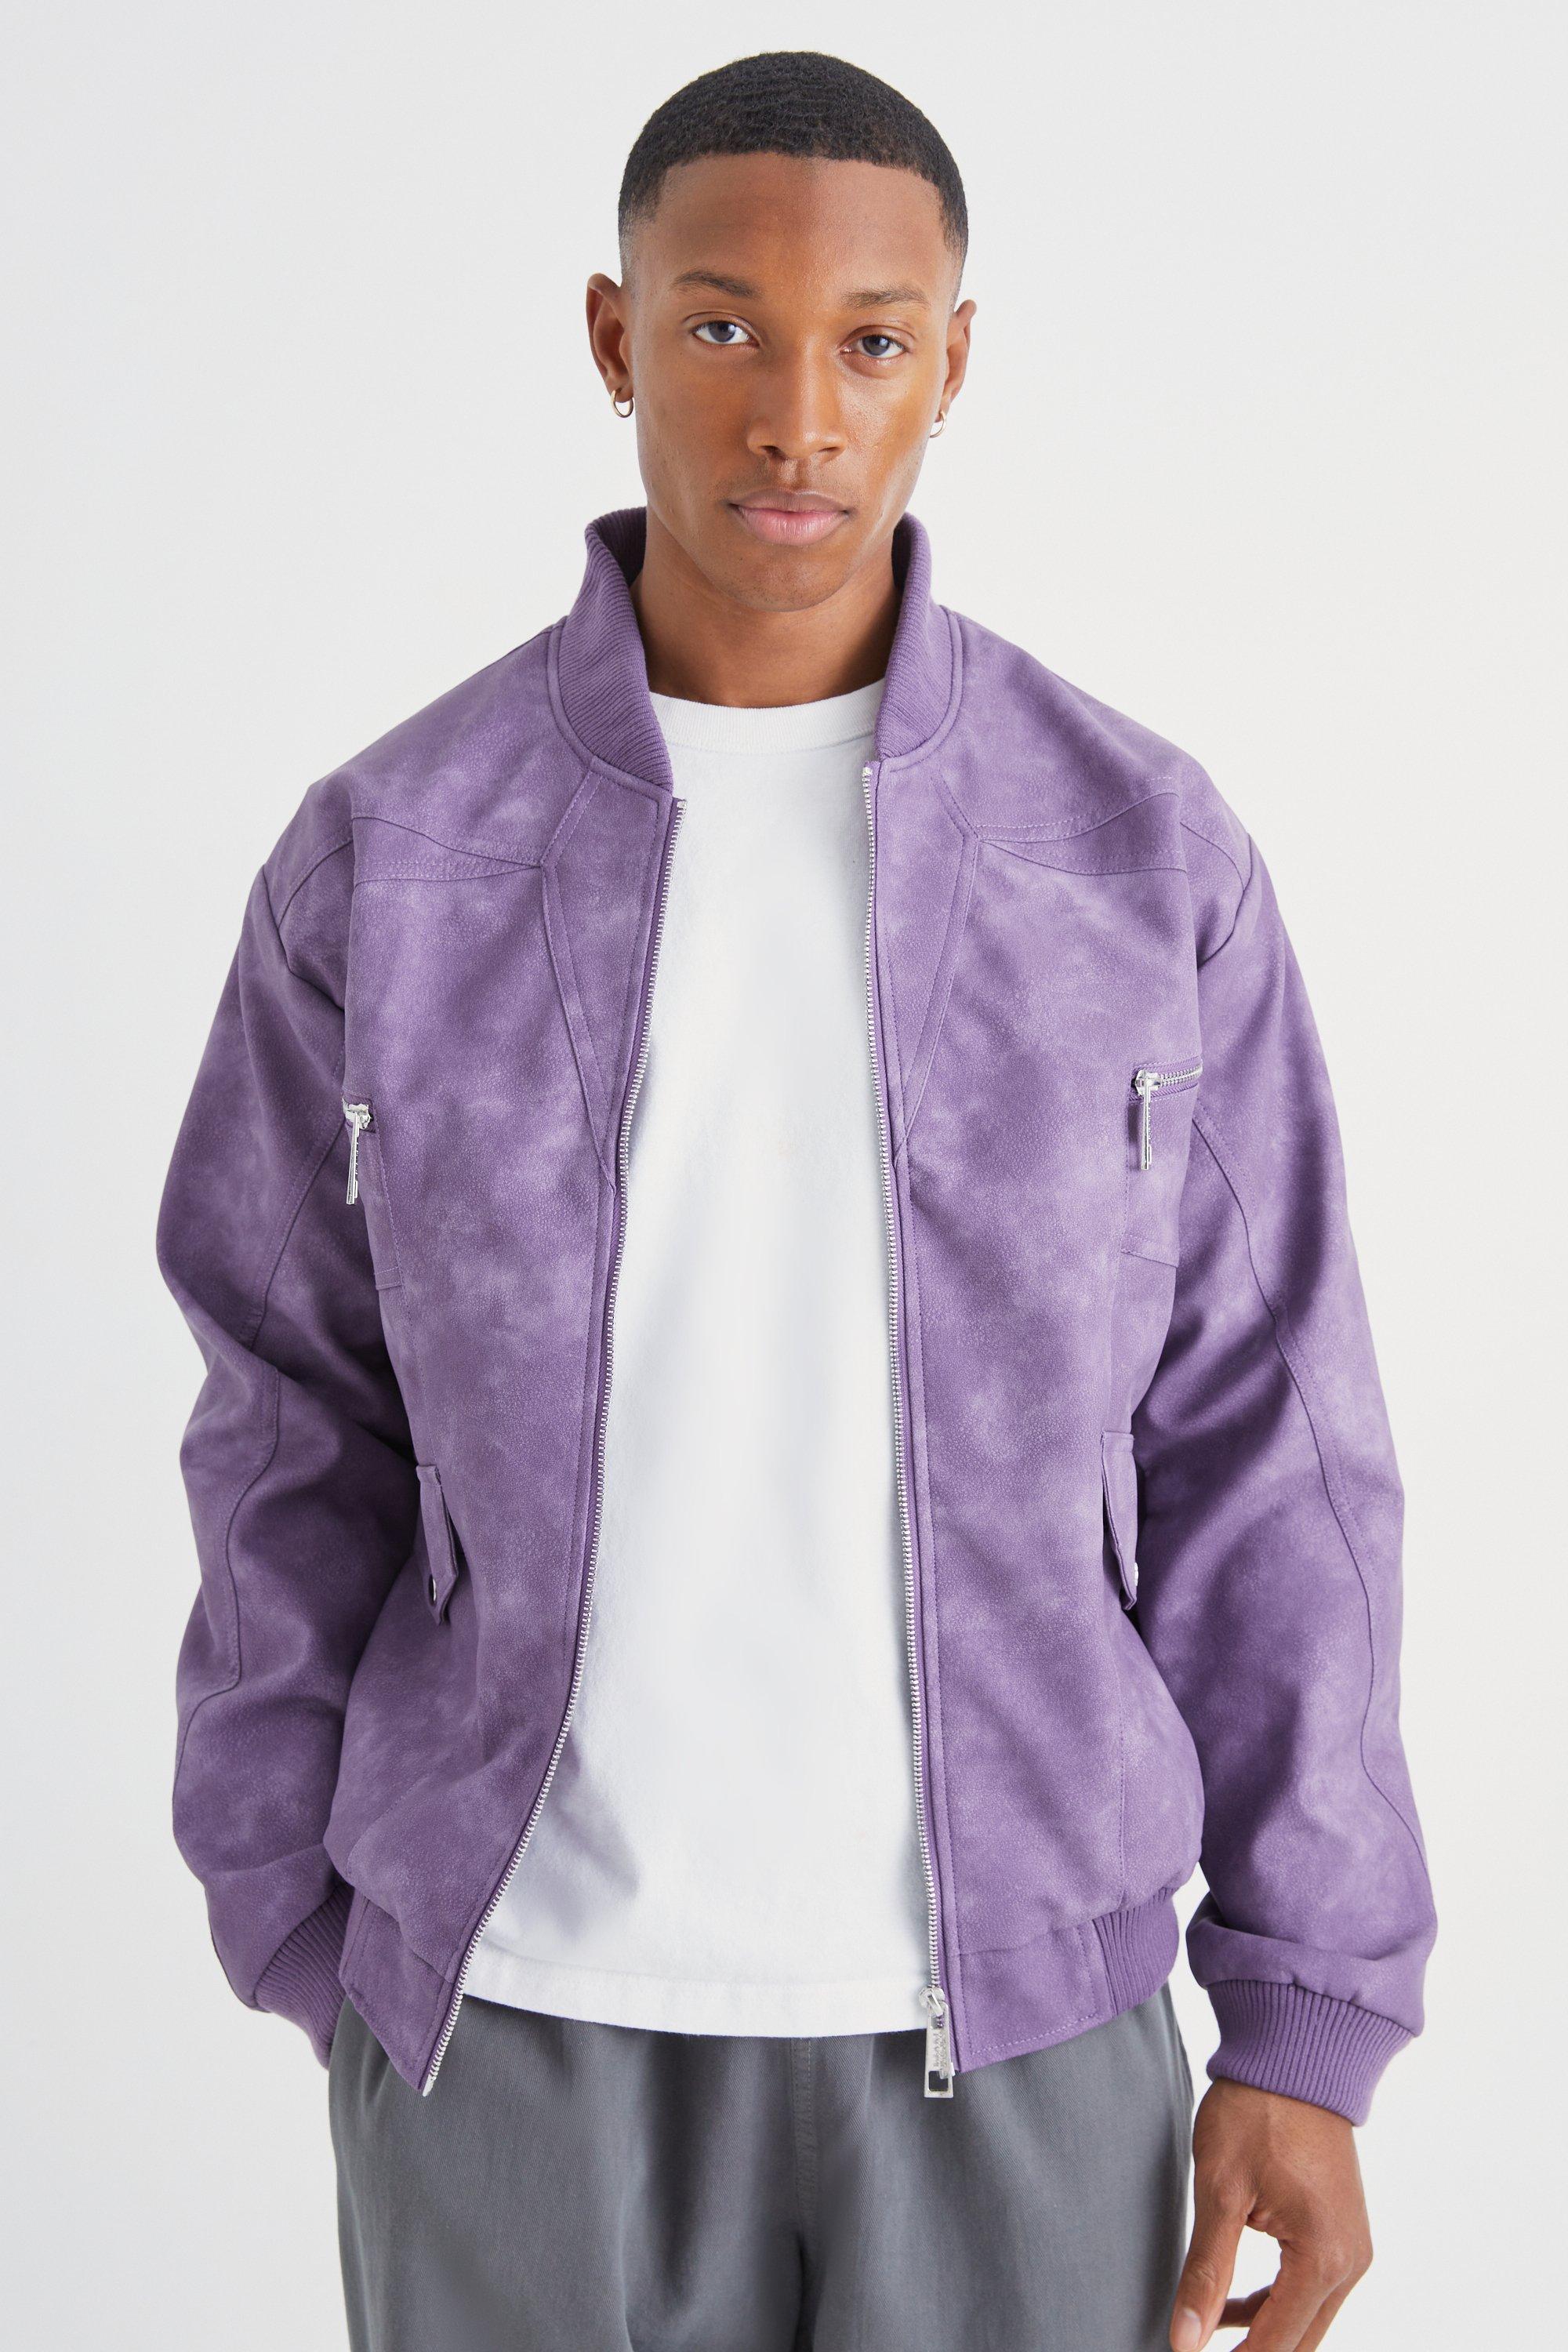 VINTAGE Men's Arcticwear Purple Ski Jacket | Purple ski jacket, Ski jacket,  Jackets